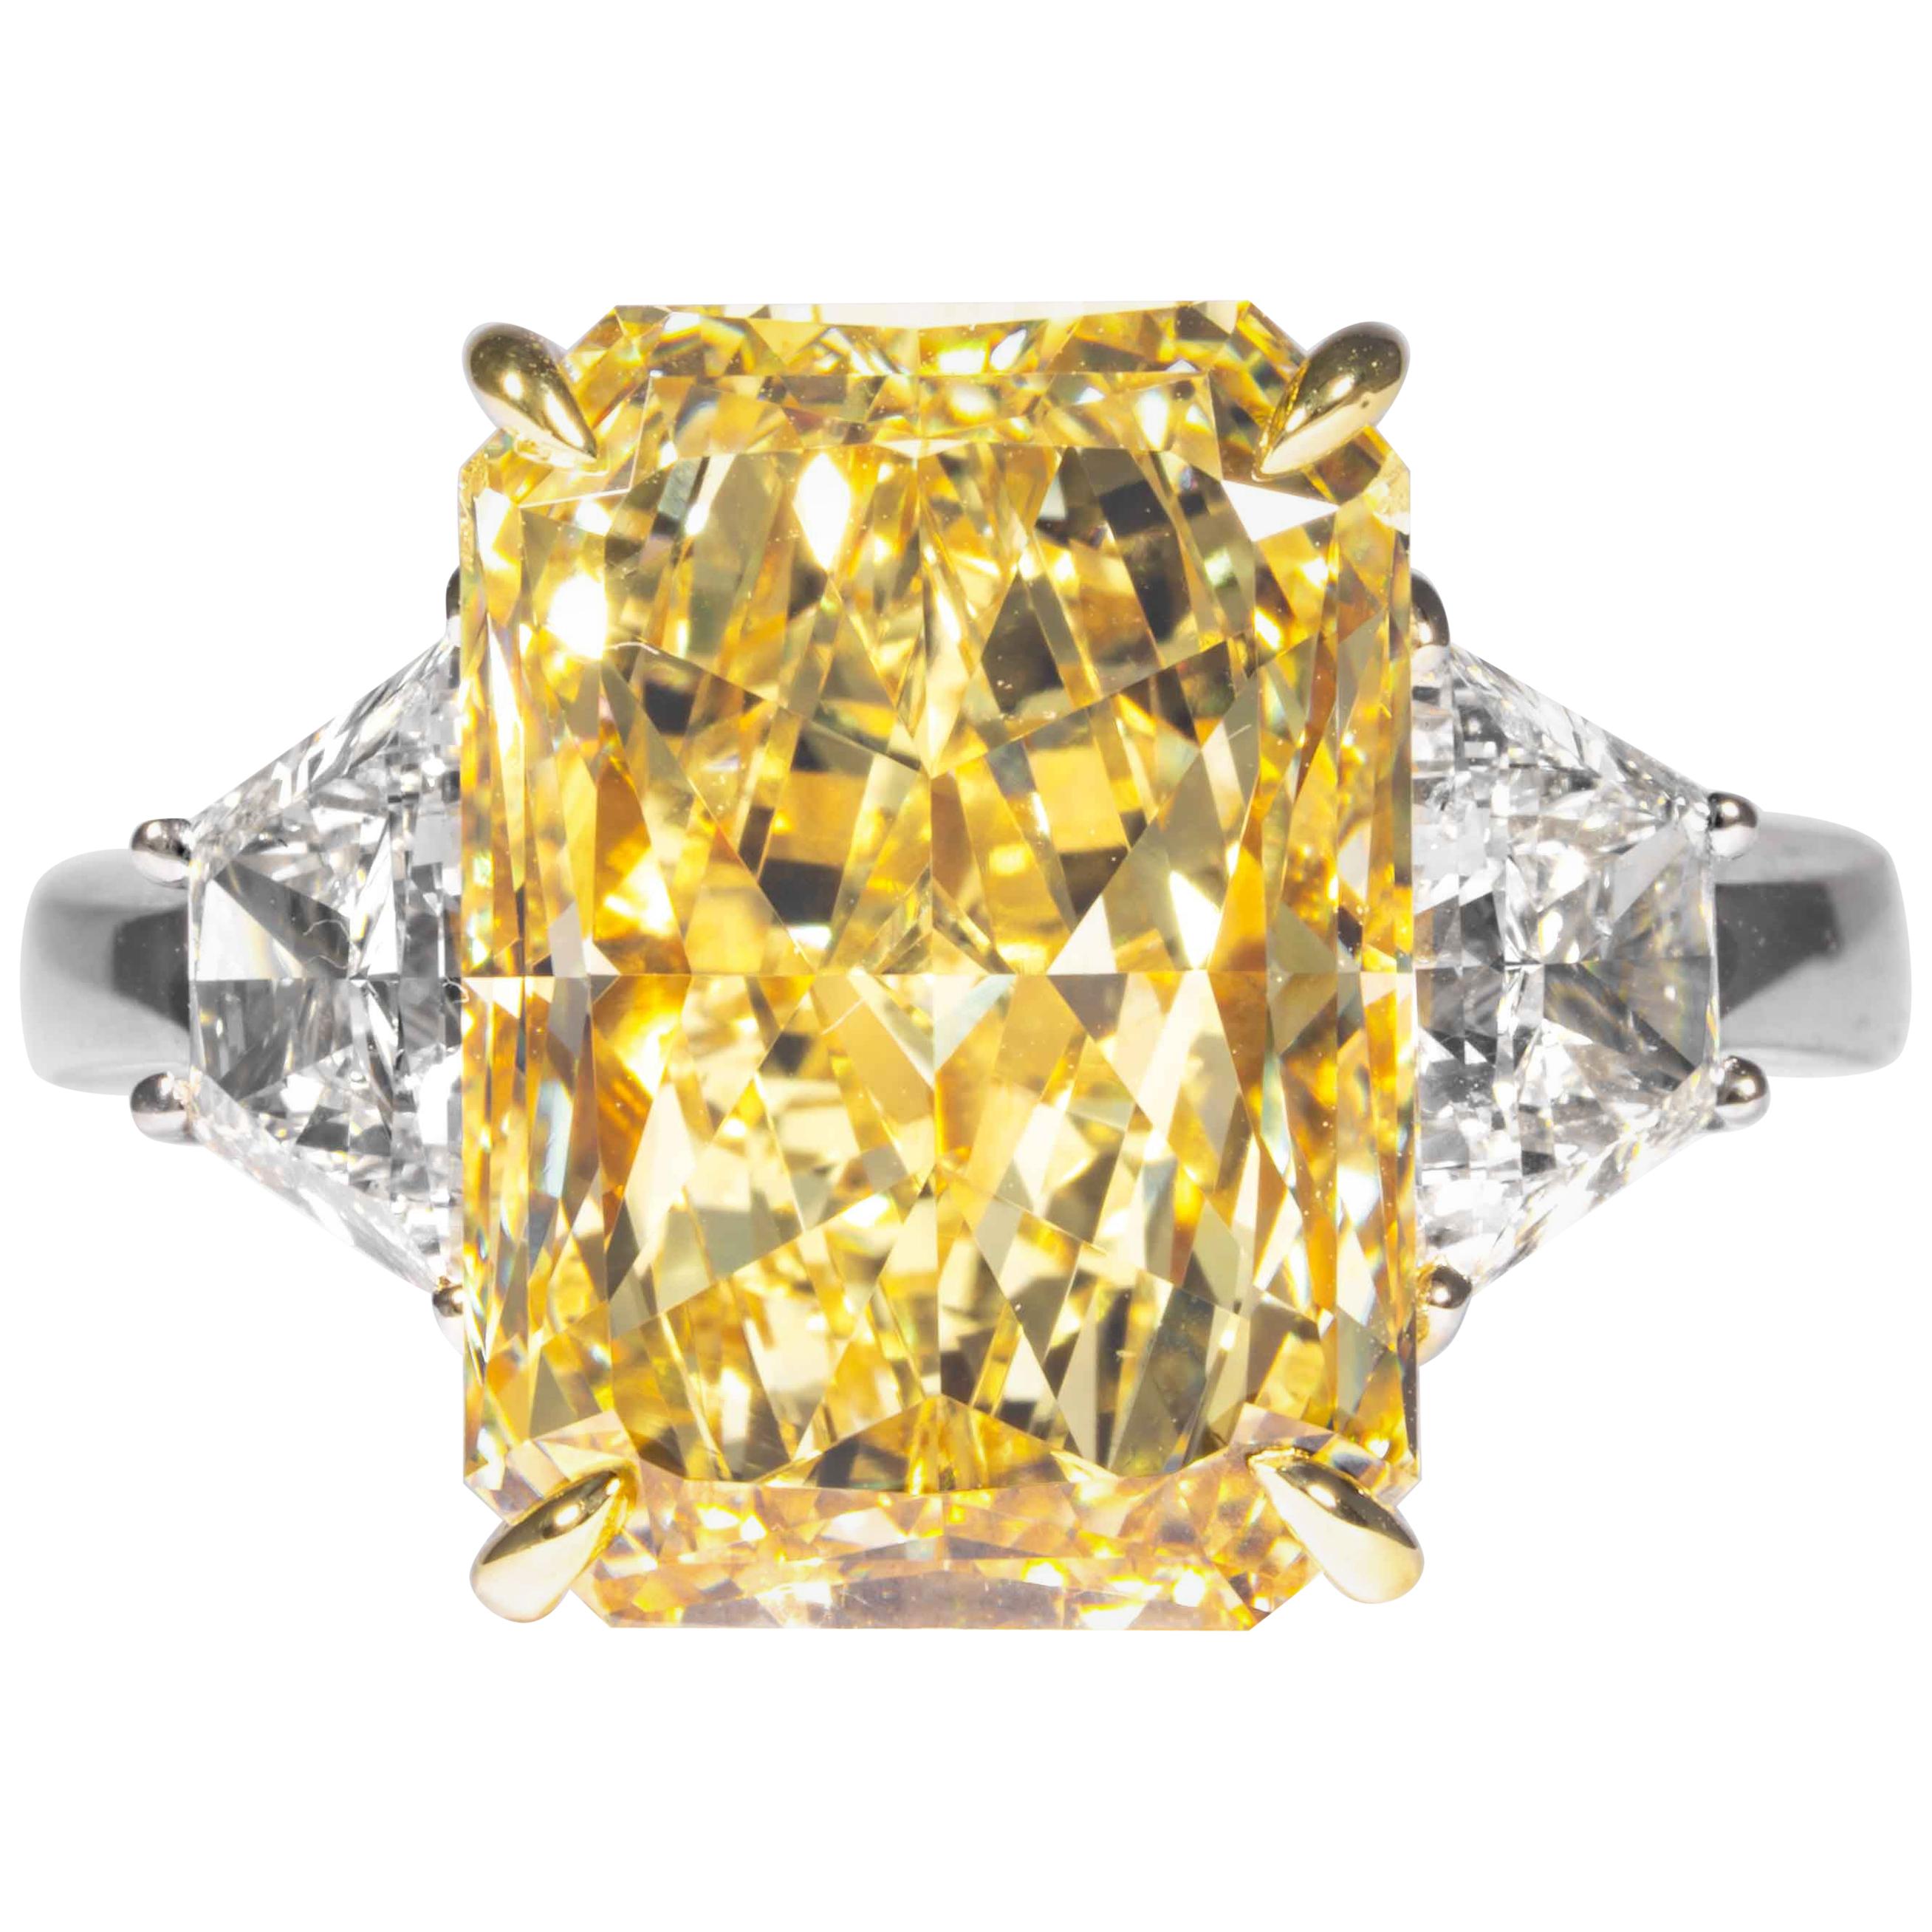 Shreve, Crump & Low GIA Certified 7.95 Carat Fancy Yellow Radiant Diamond Ring